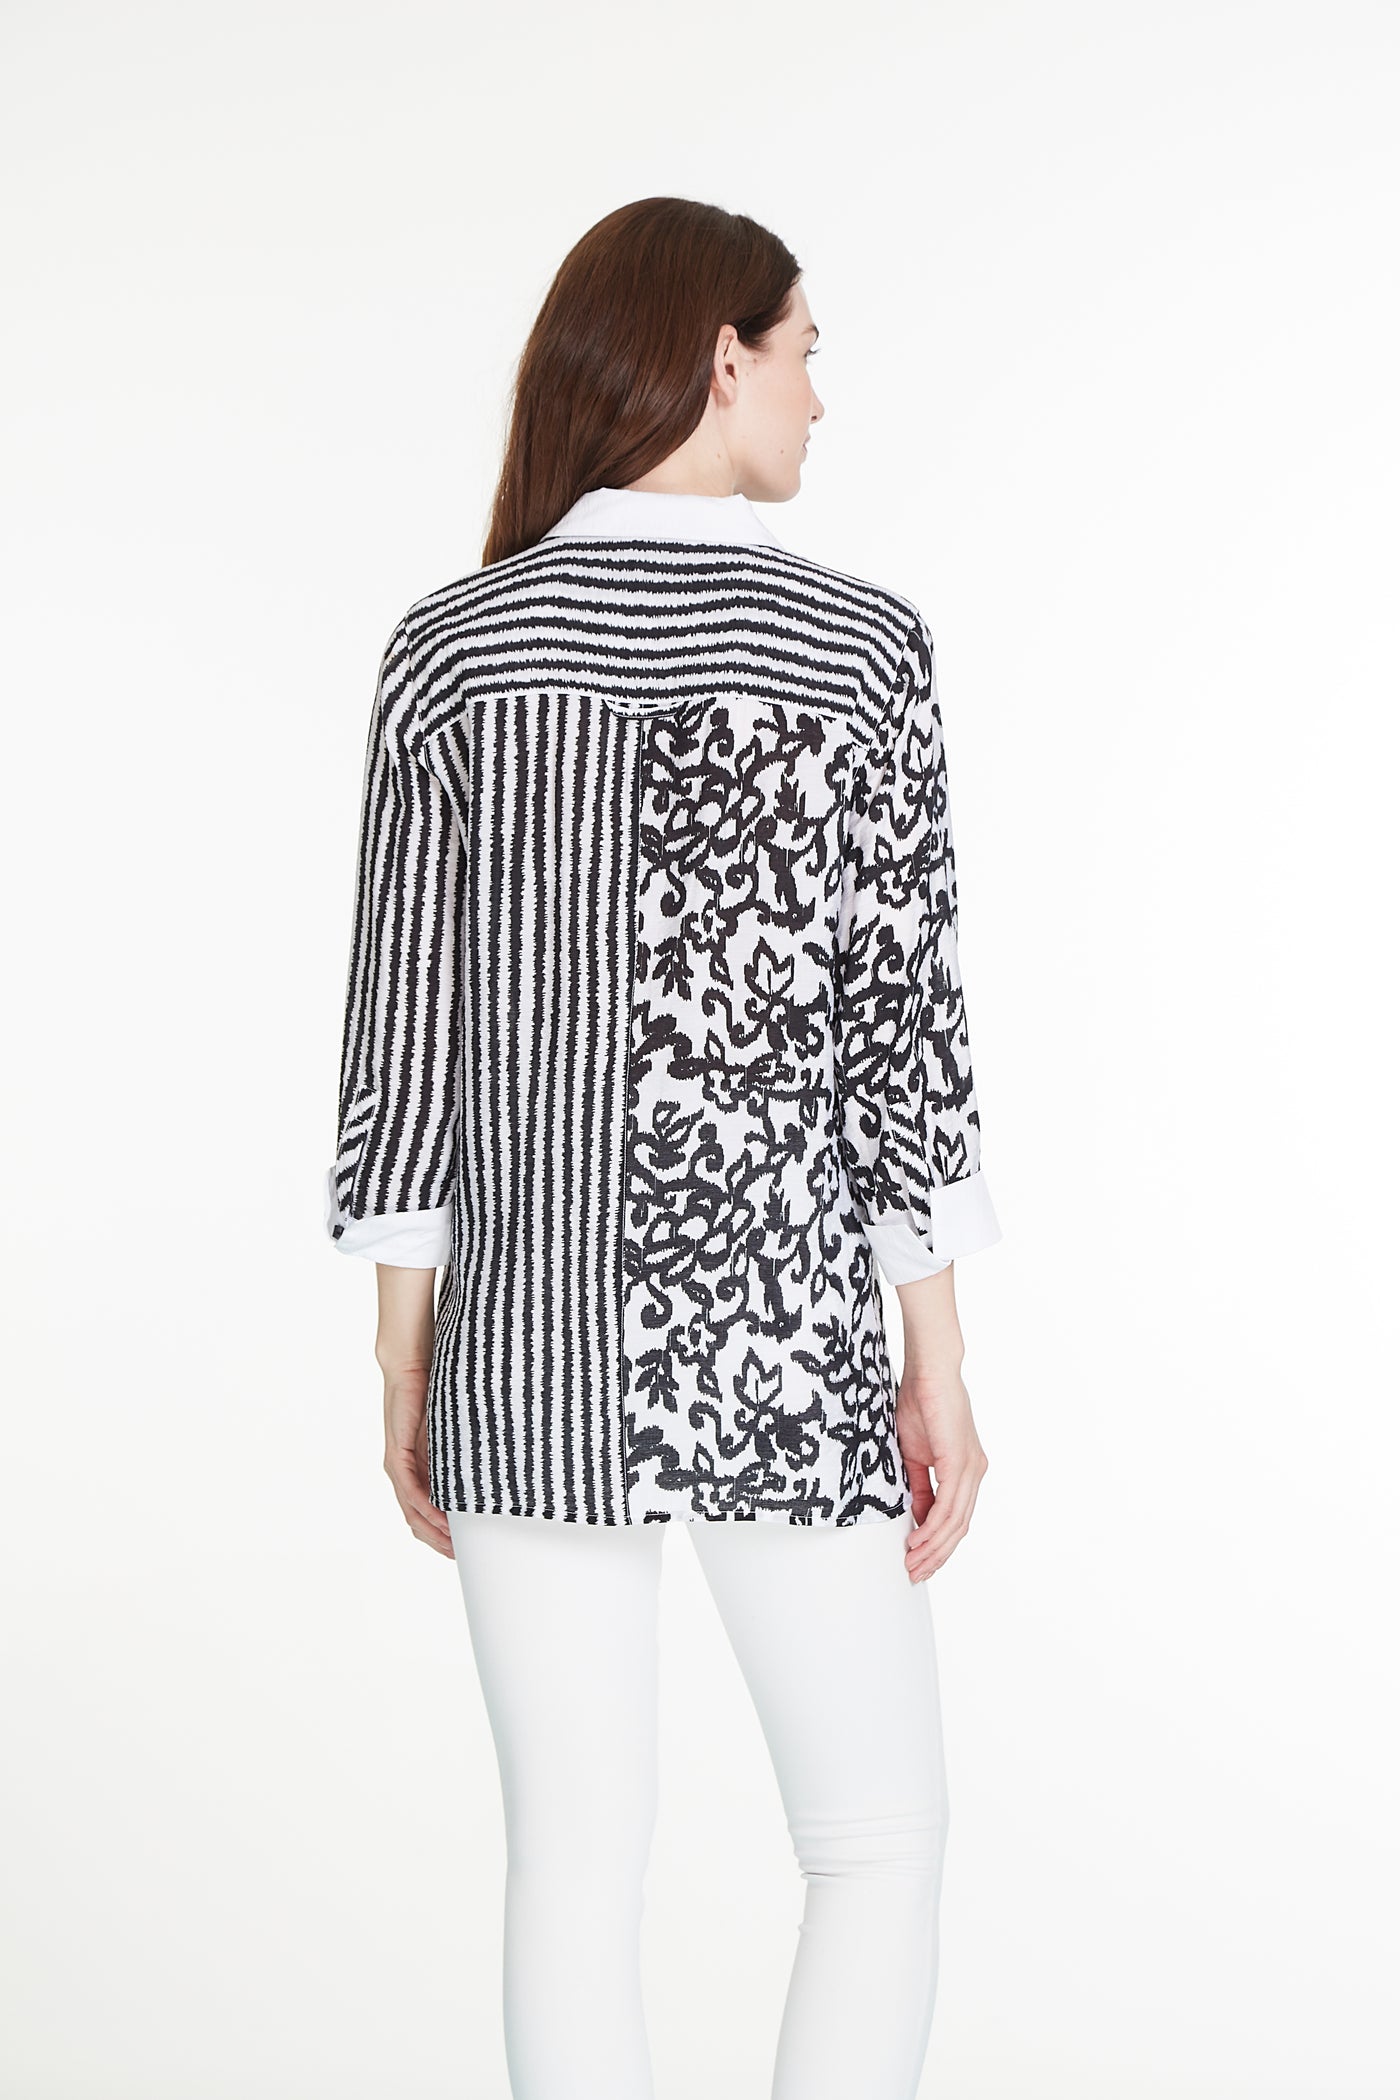 Print Crinkle Woven Shirt - Women's - Black/White Print